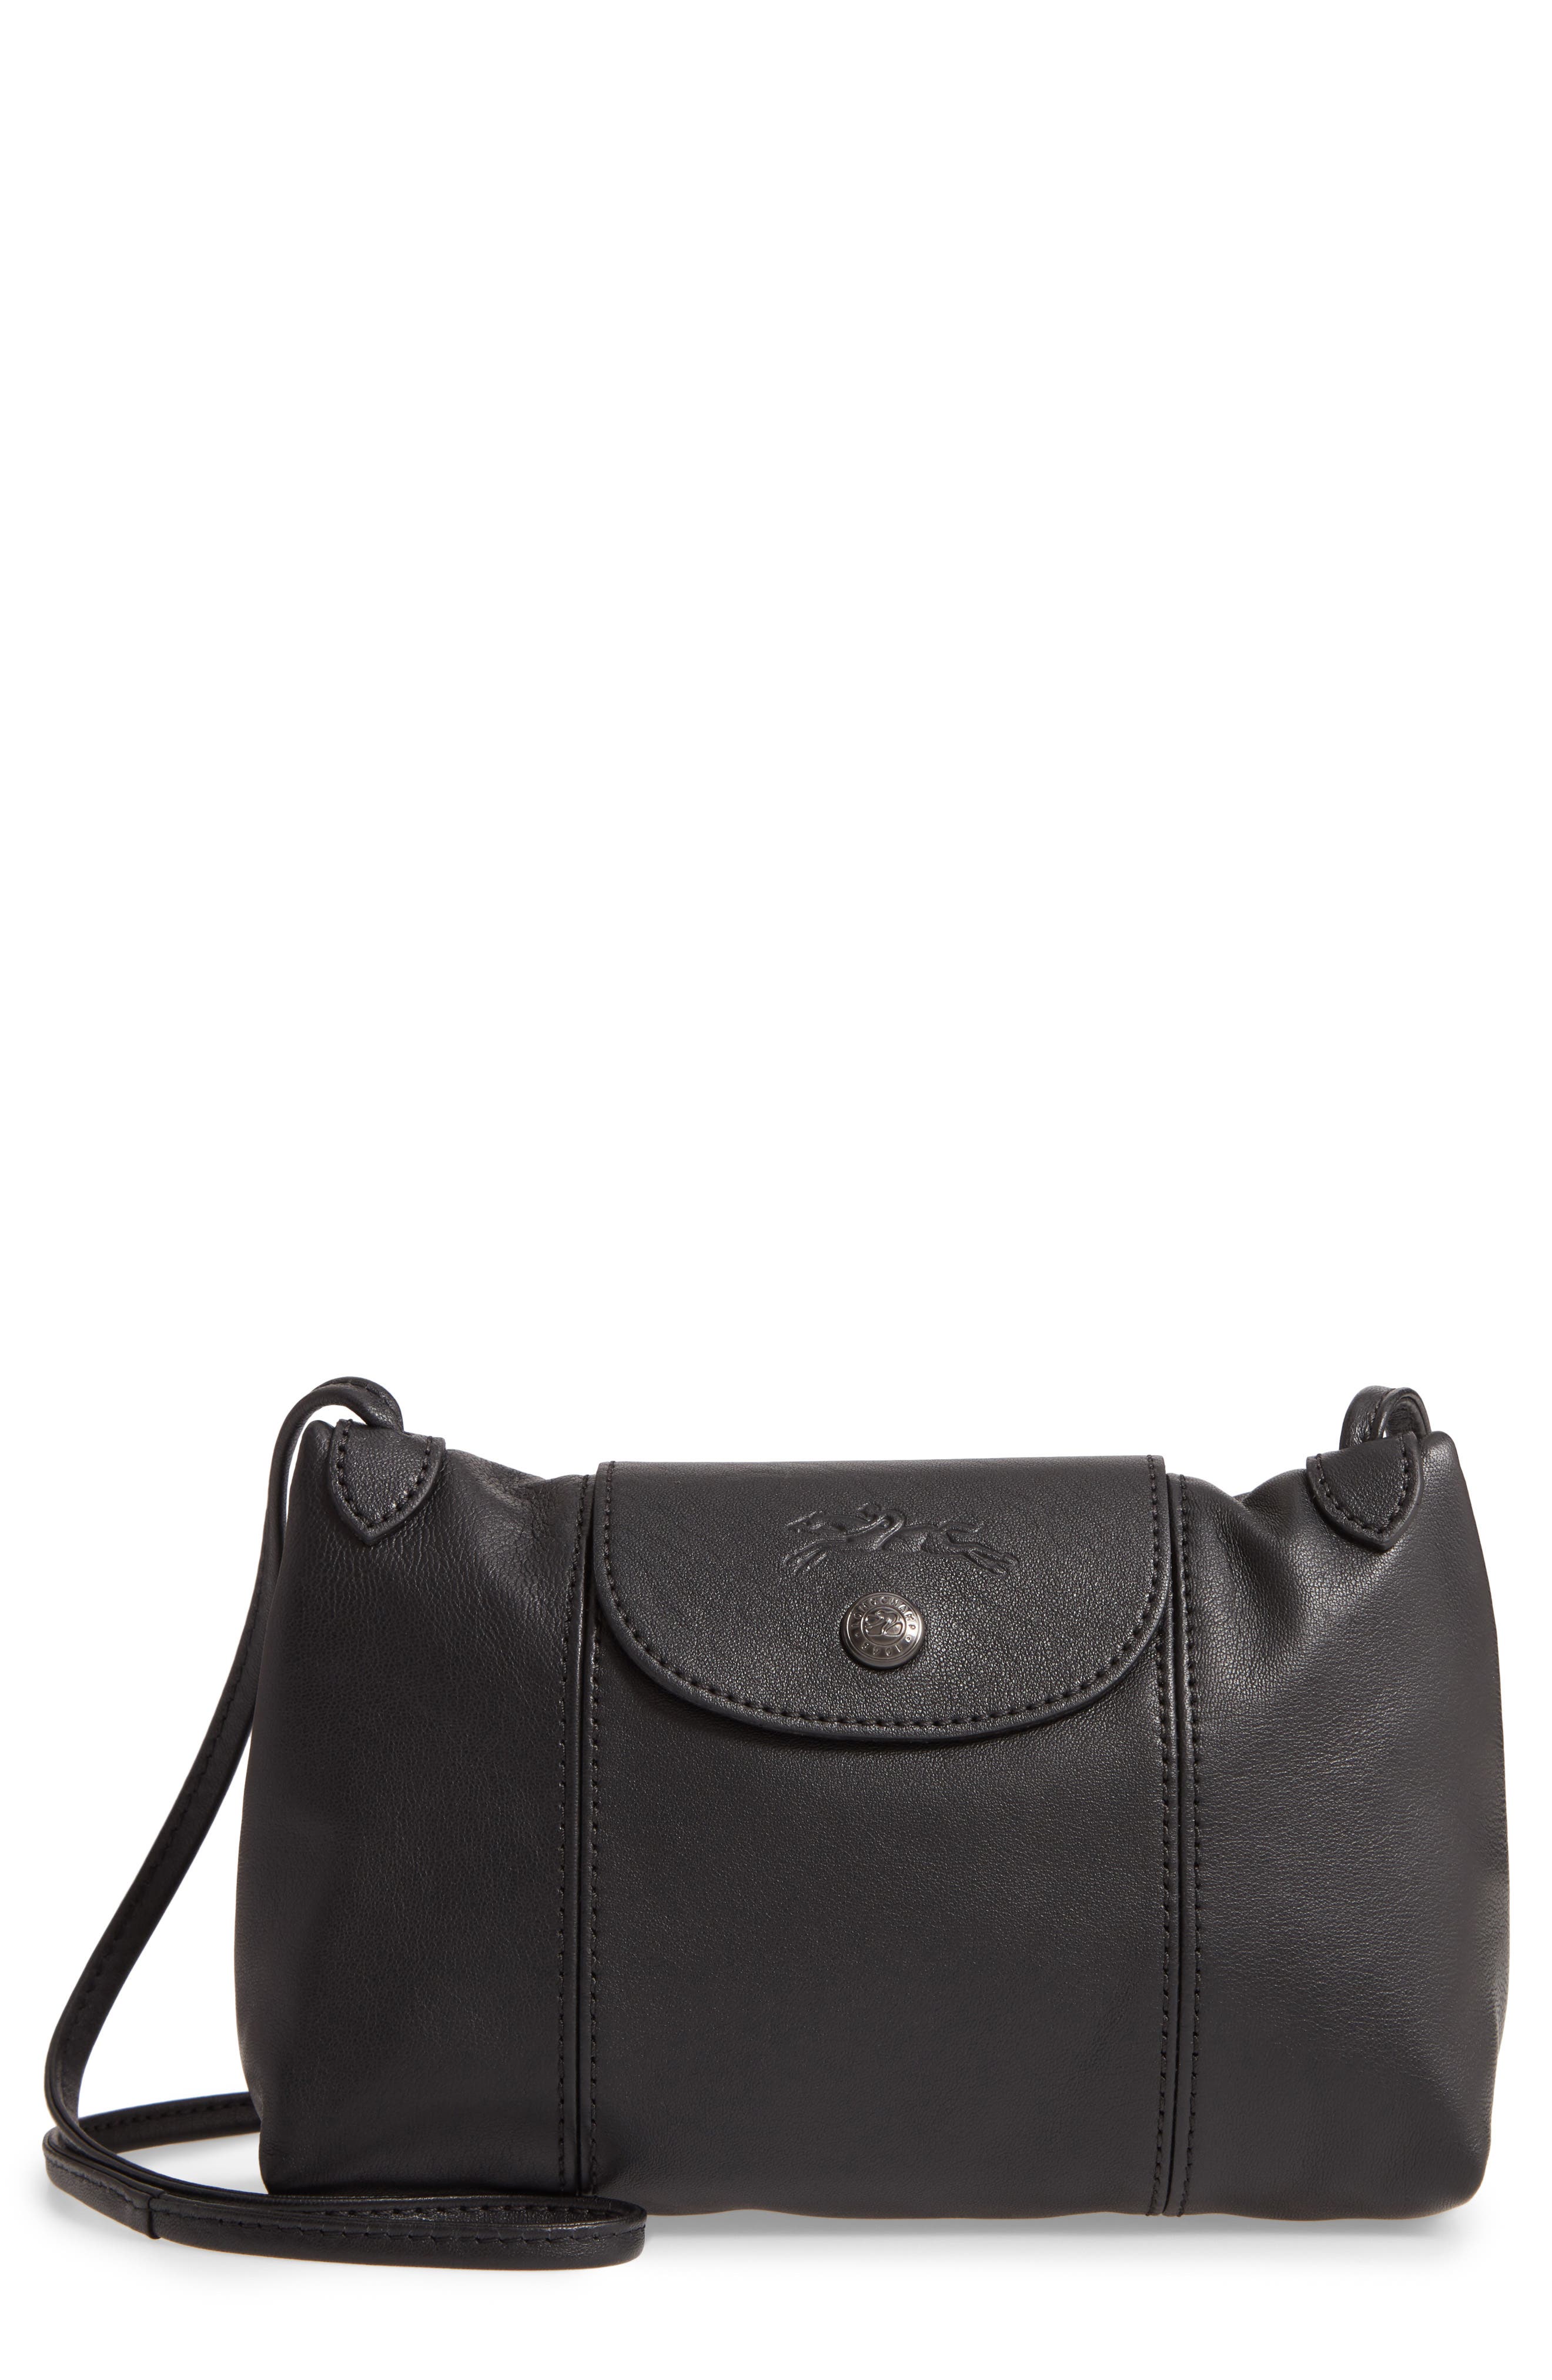 longchamp black leather crossbody bag